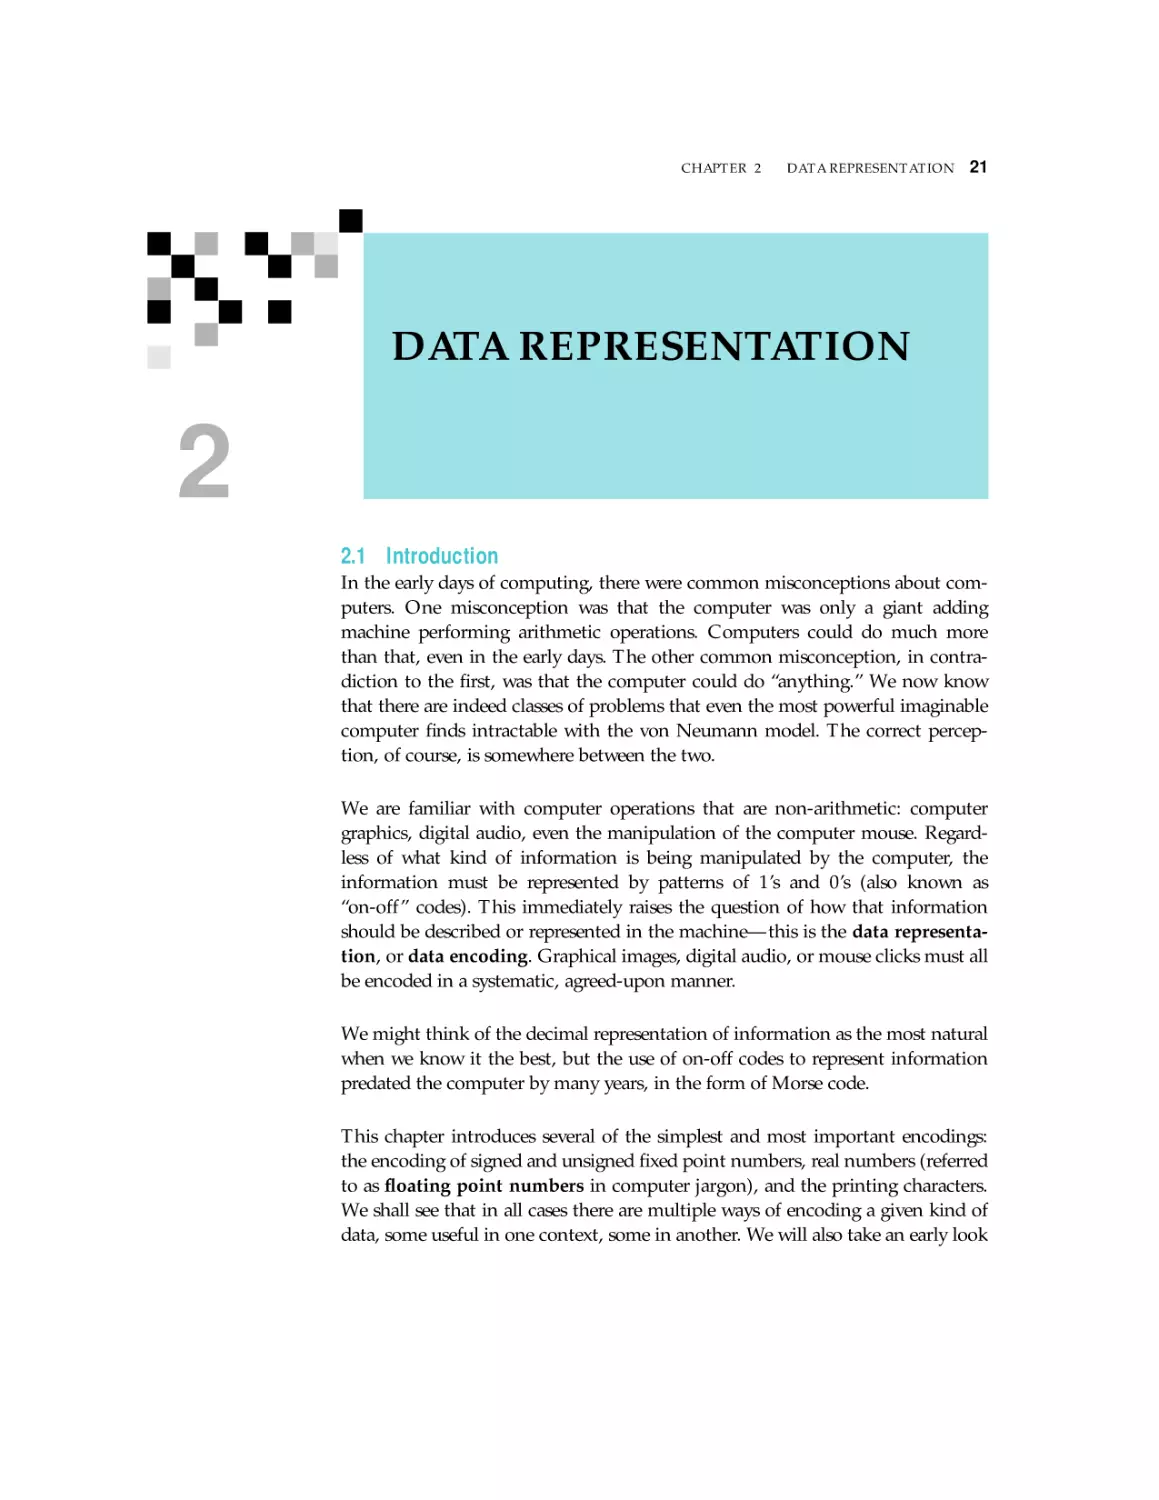 2. DATA REPRESENTATION